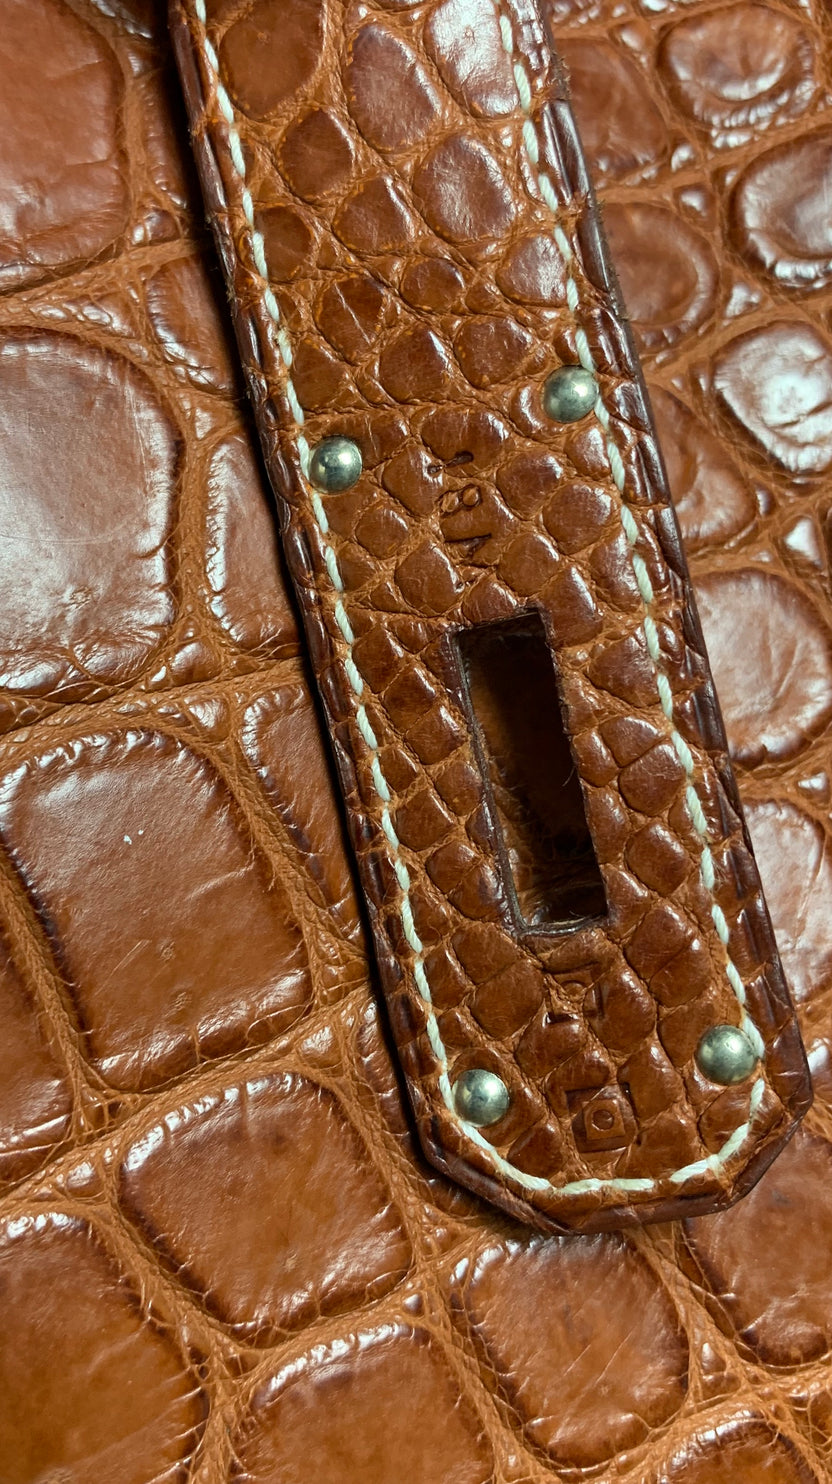 Hermes Birkin Bag Crocodile Leather Gold Hardware In Brown